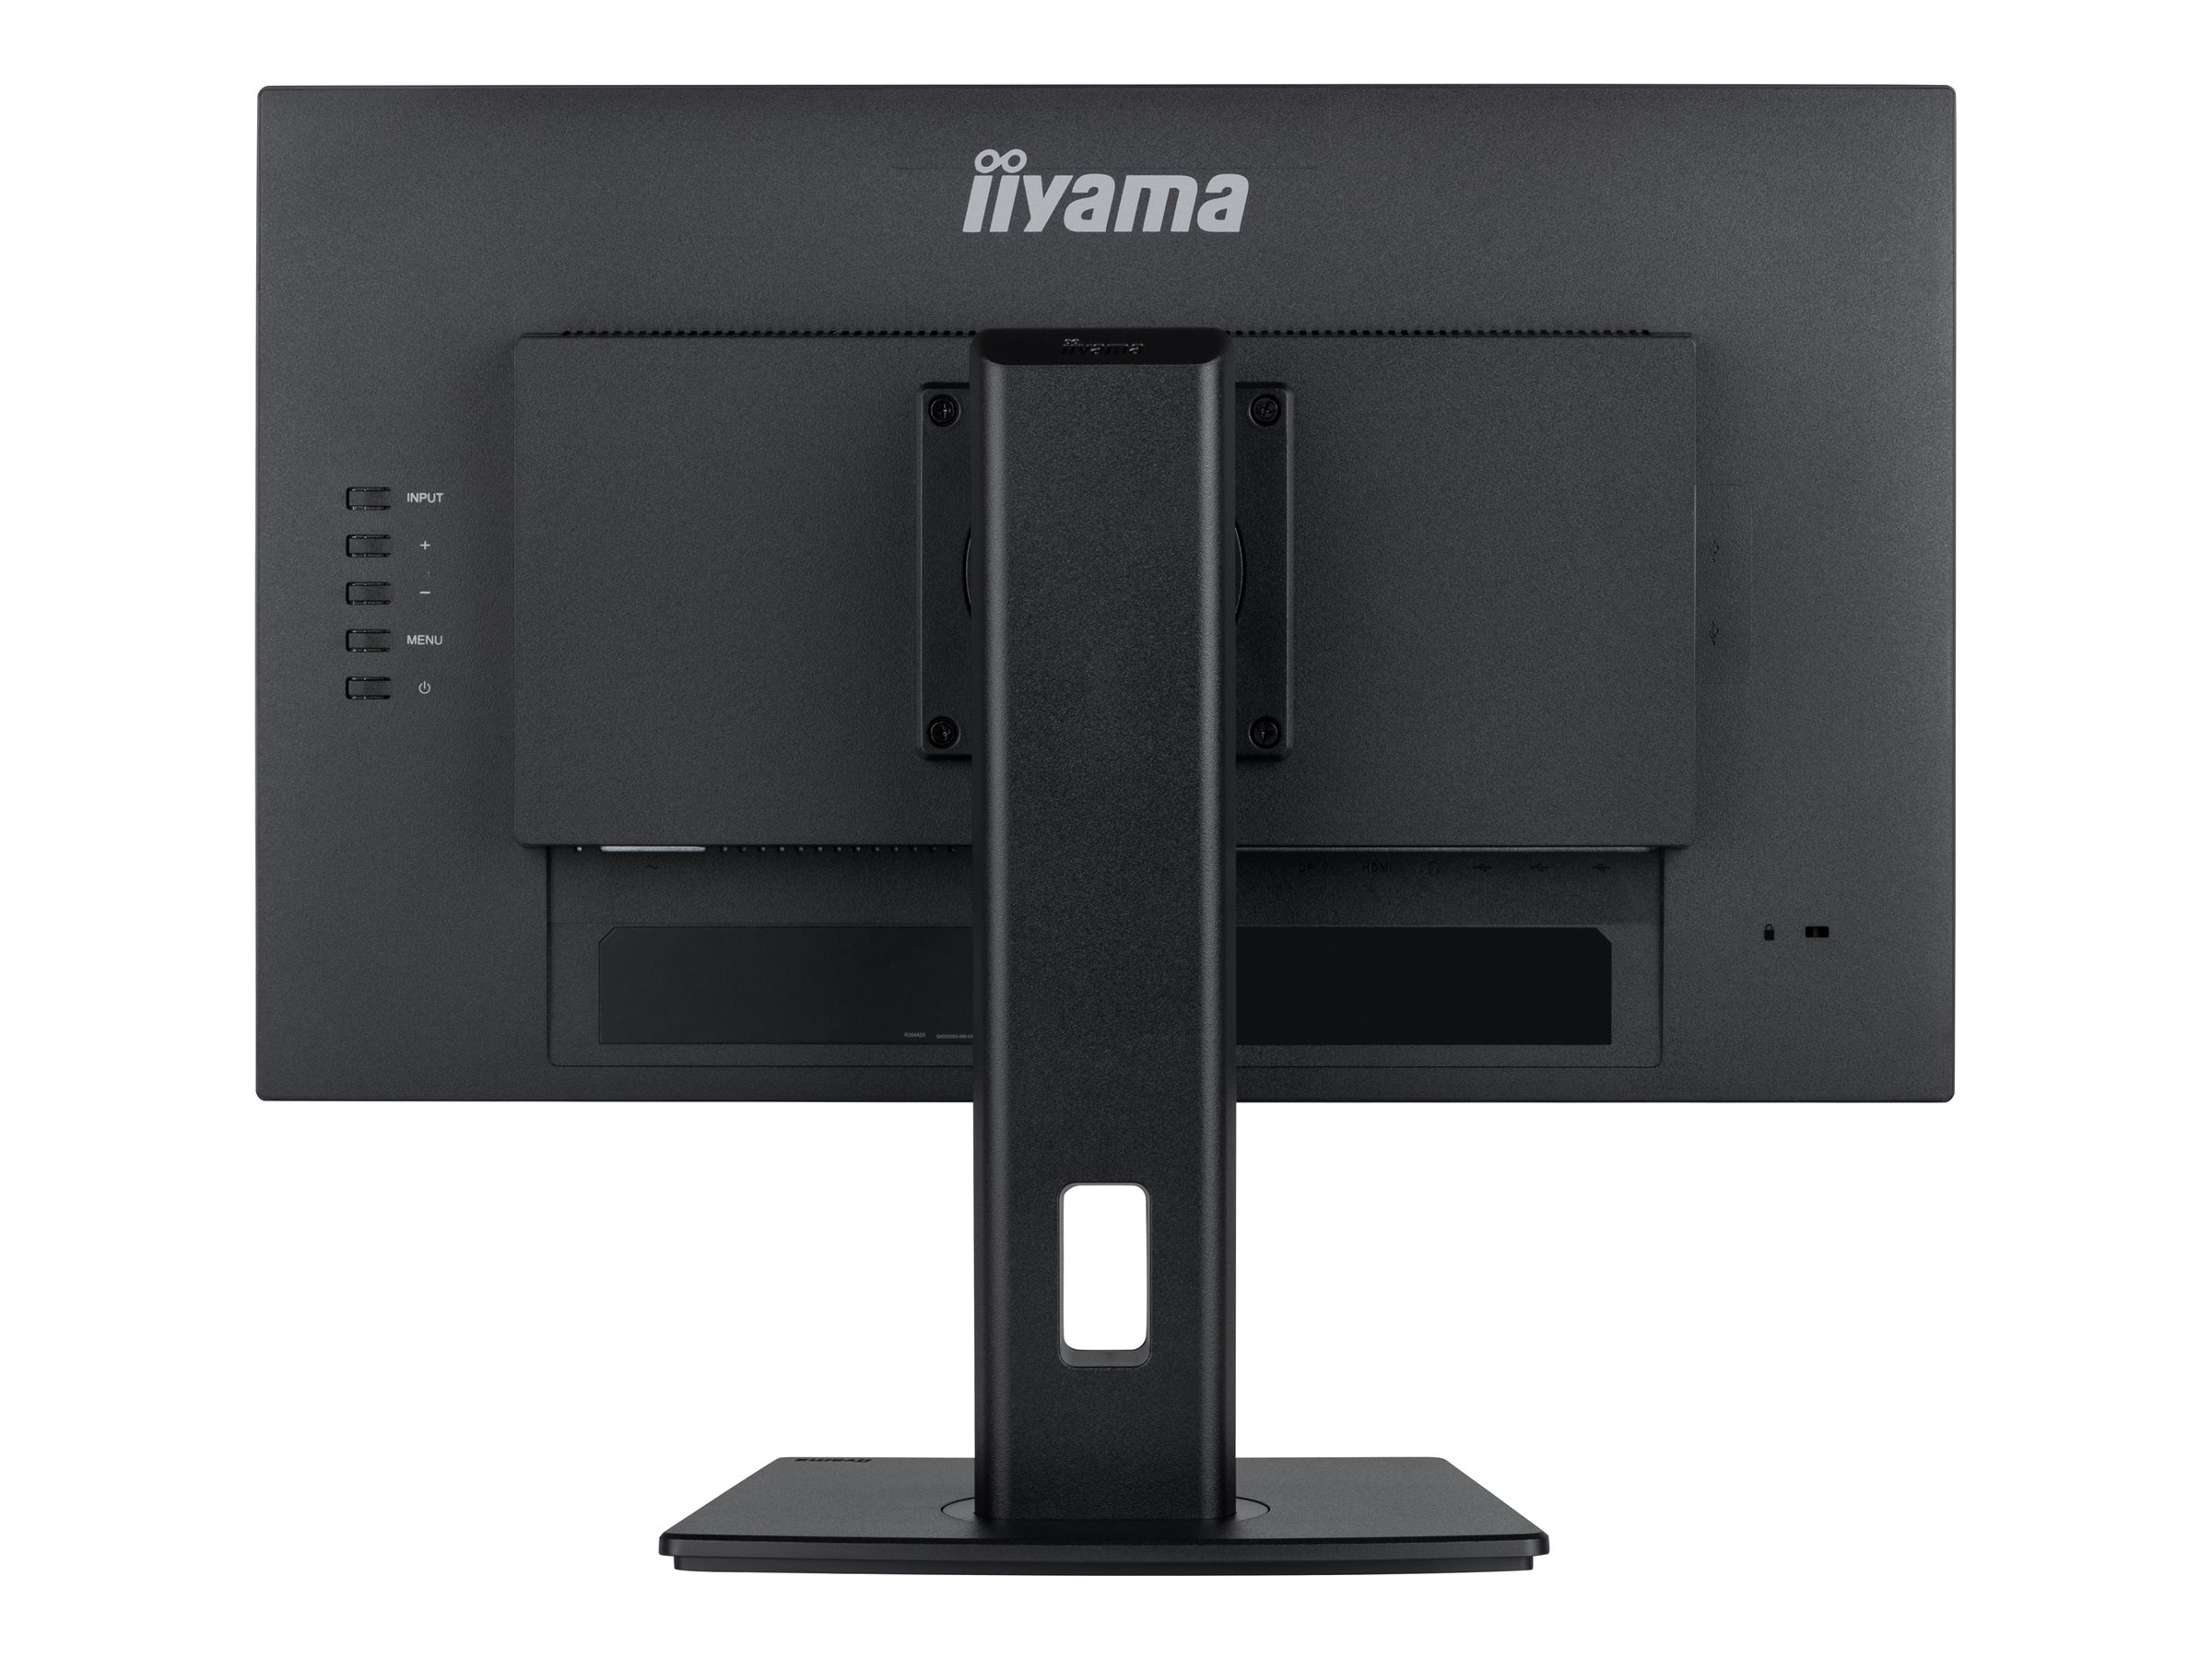 iiyama ProLite XUB2492HSU-B6 - Écran LED - 24" (23.8" visualisable) - 1920 x 1080 Full HD (1080p) @ 100 Hz - IPS - 250 cd/m² - 1300:1 - 0.4 ms - HDMI, DisplayPort - haut-parleurs - noir mat - XUB2492HSU-B6 - Écrans d'ordinateur